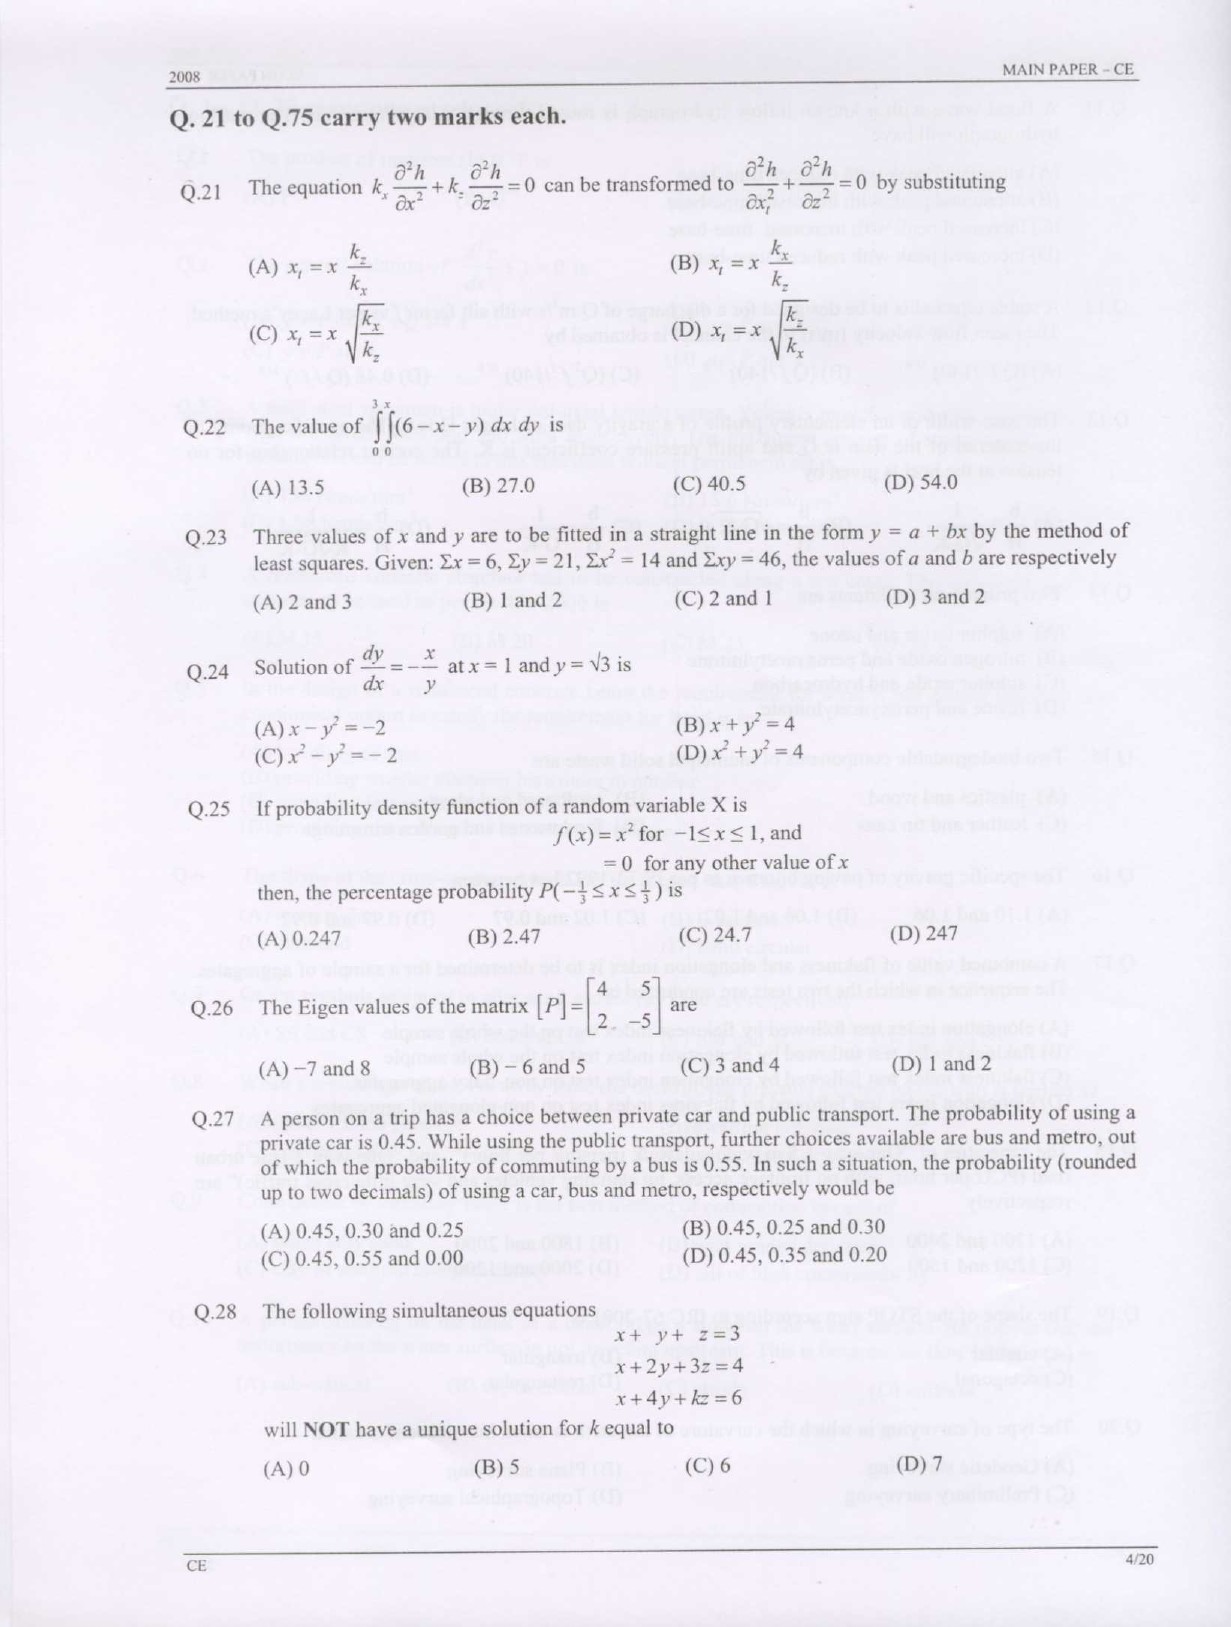 GATE Exam Question Paper 2008 Civil Engineering 4